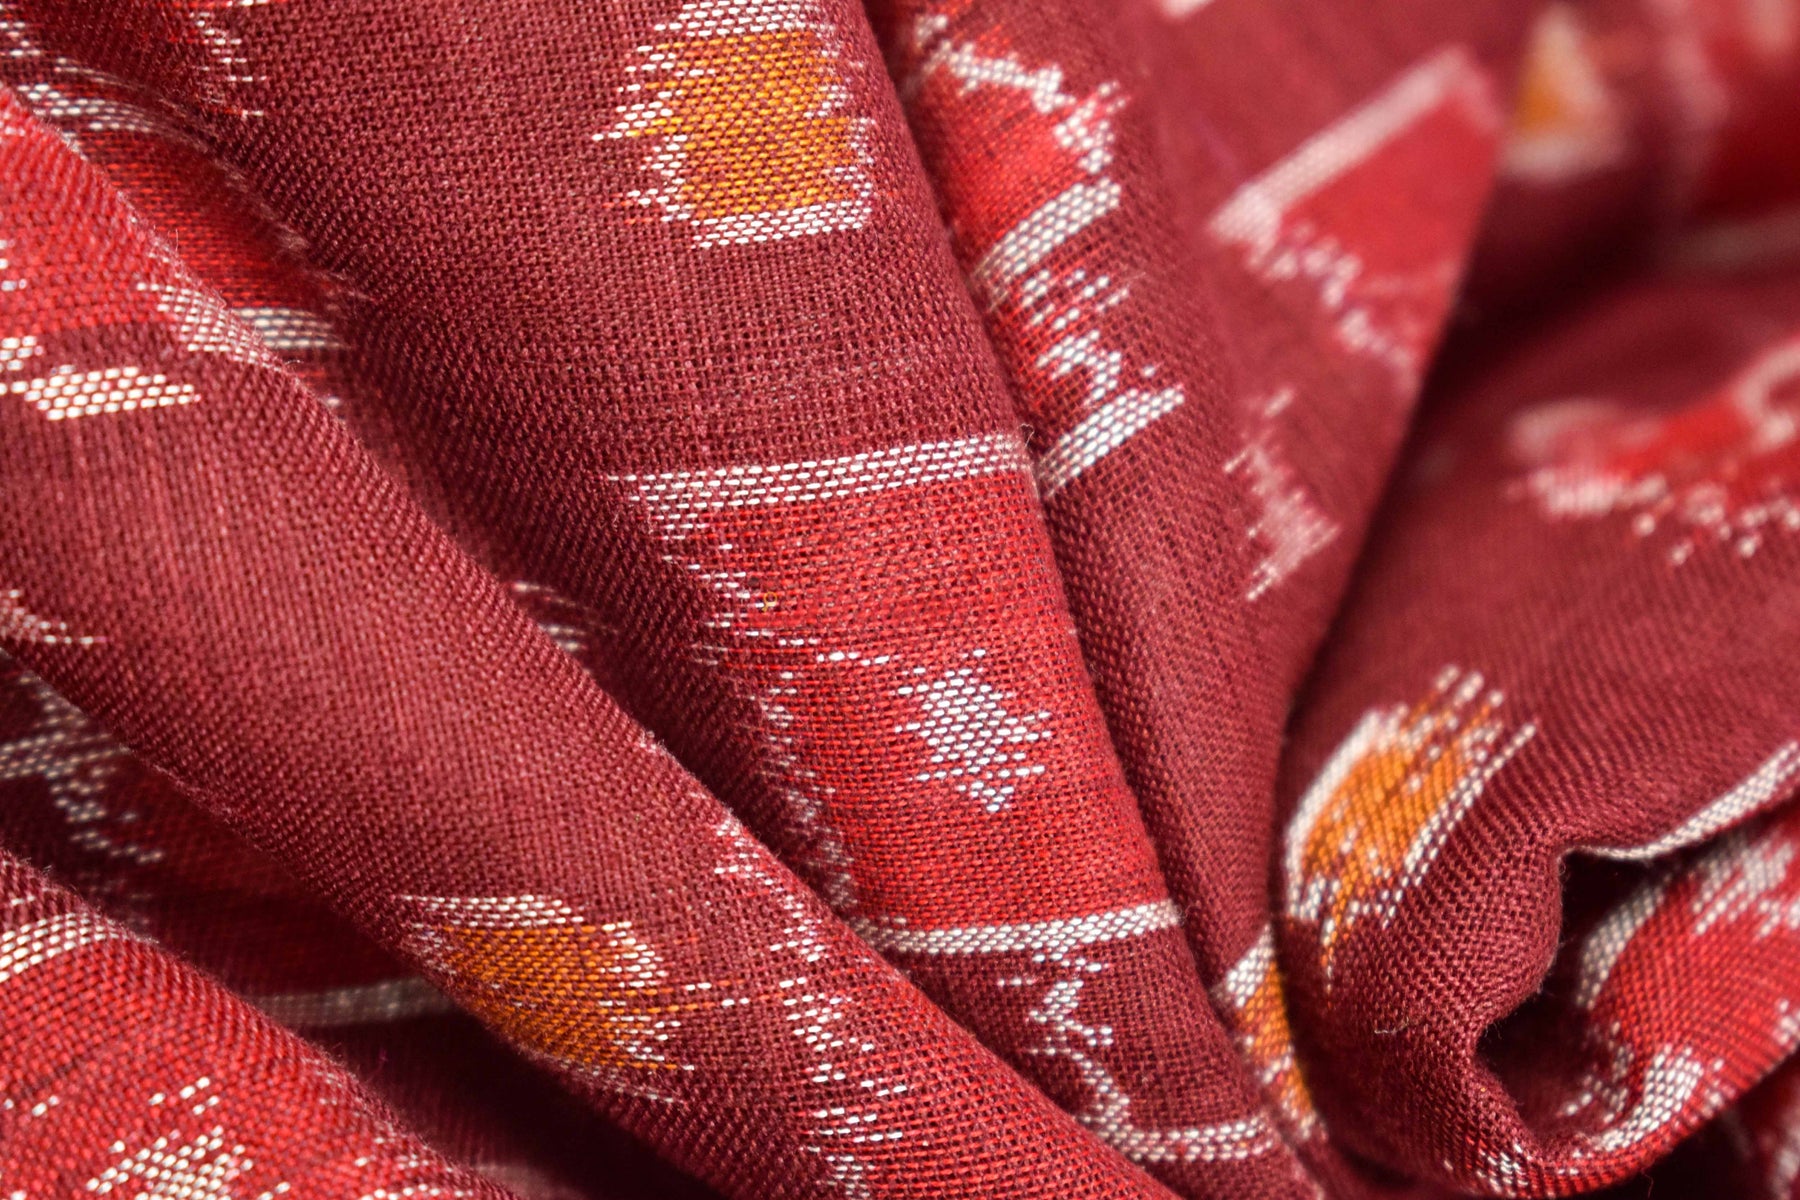 Maroon Flower Pasapali Buti (Fabric)